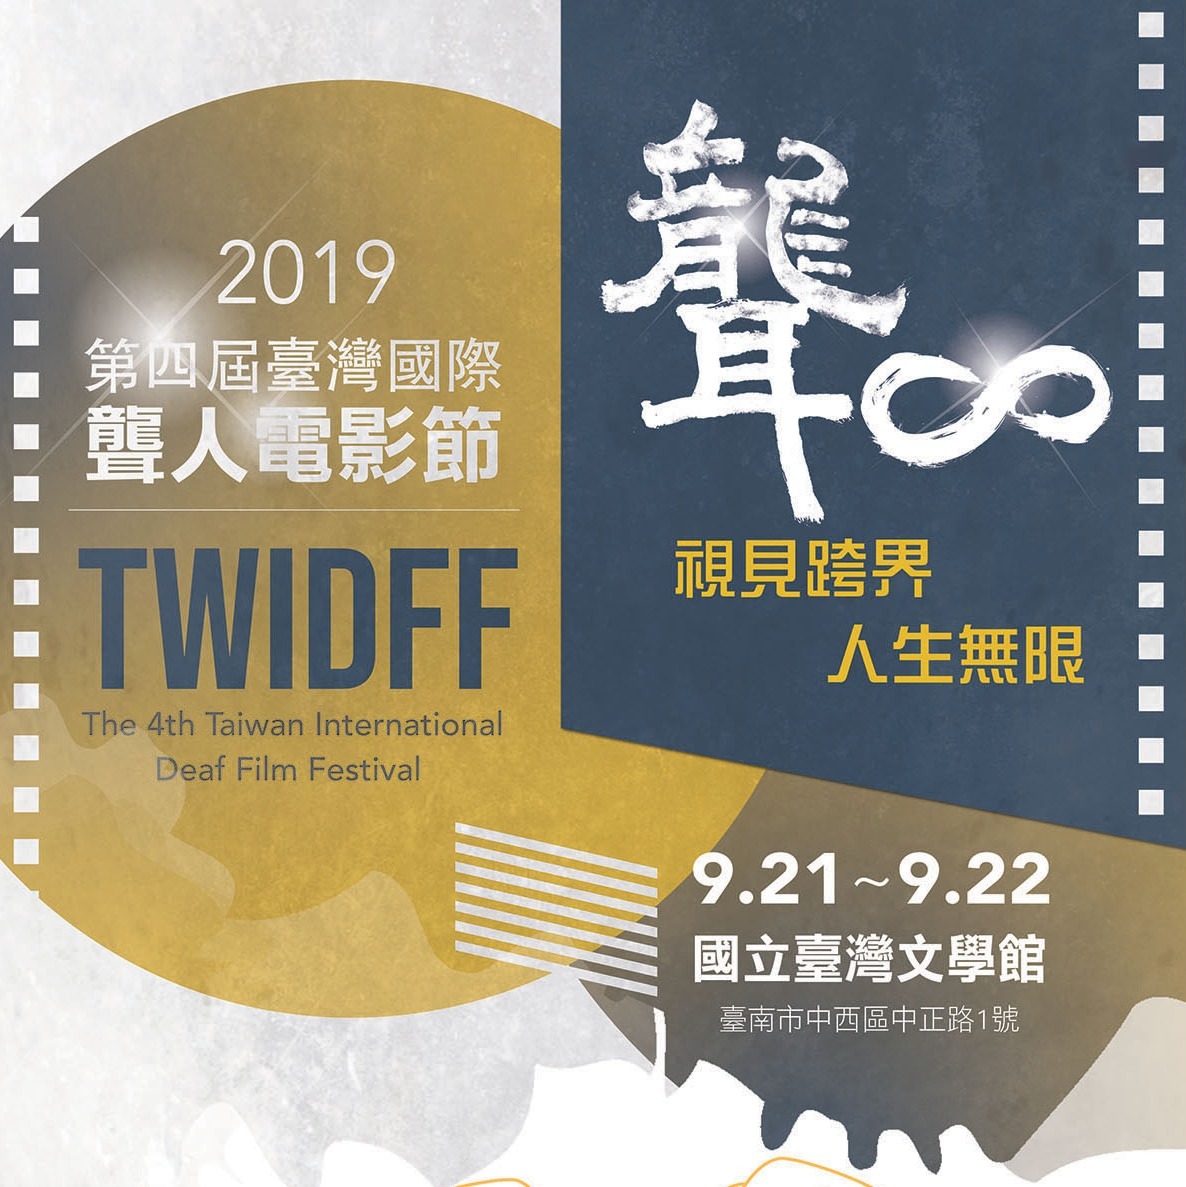 4th Taiwan International Deaf Film Festival slated for Tainan